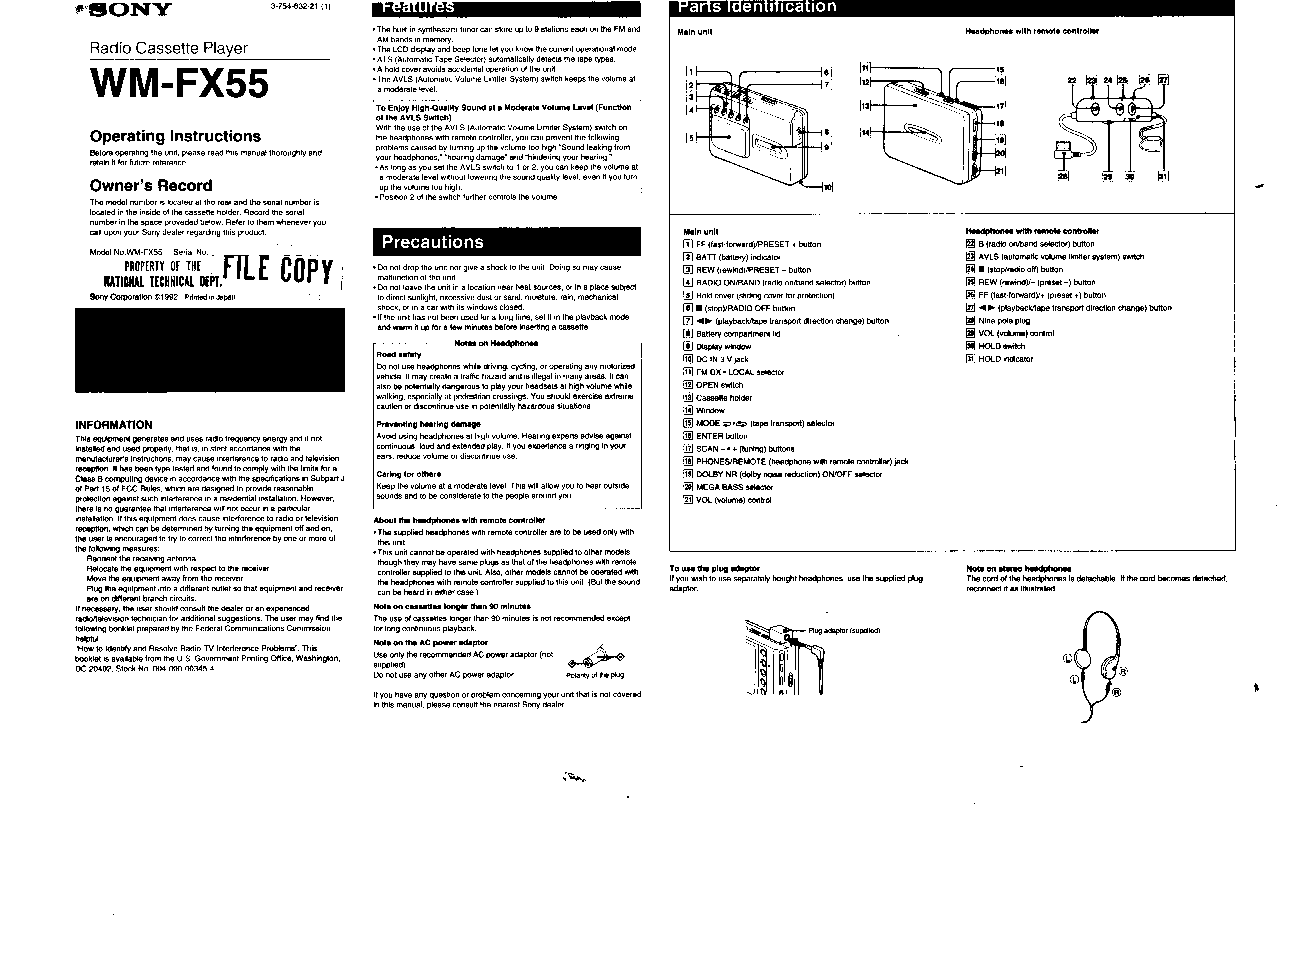 Sony WM-FX55 User Manual